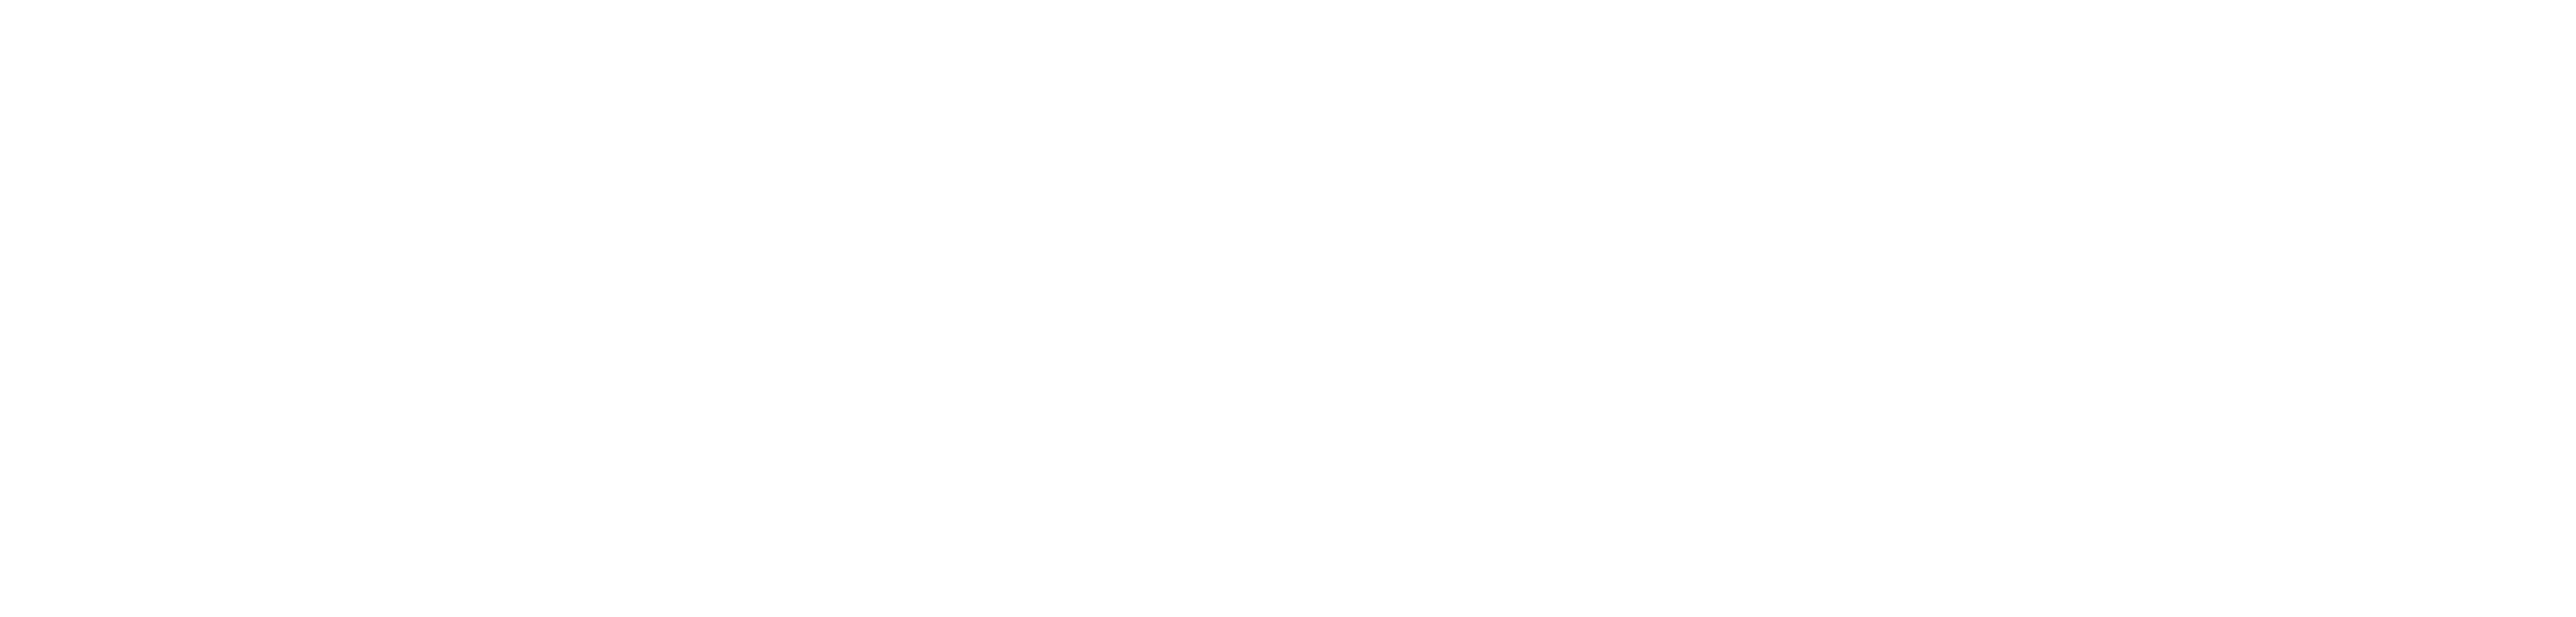 Gazioğlu Proje